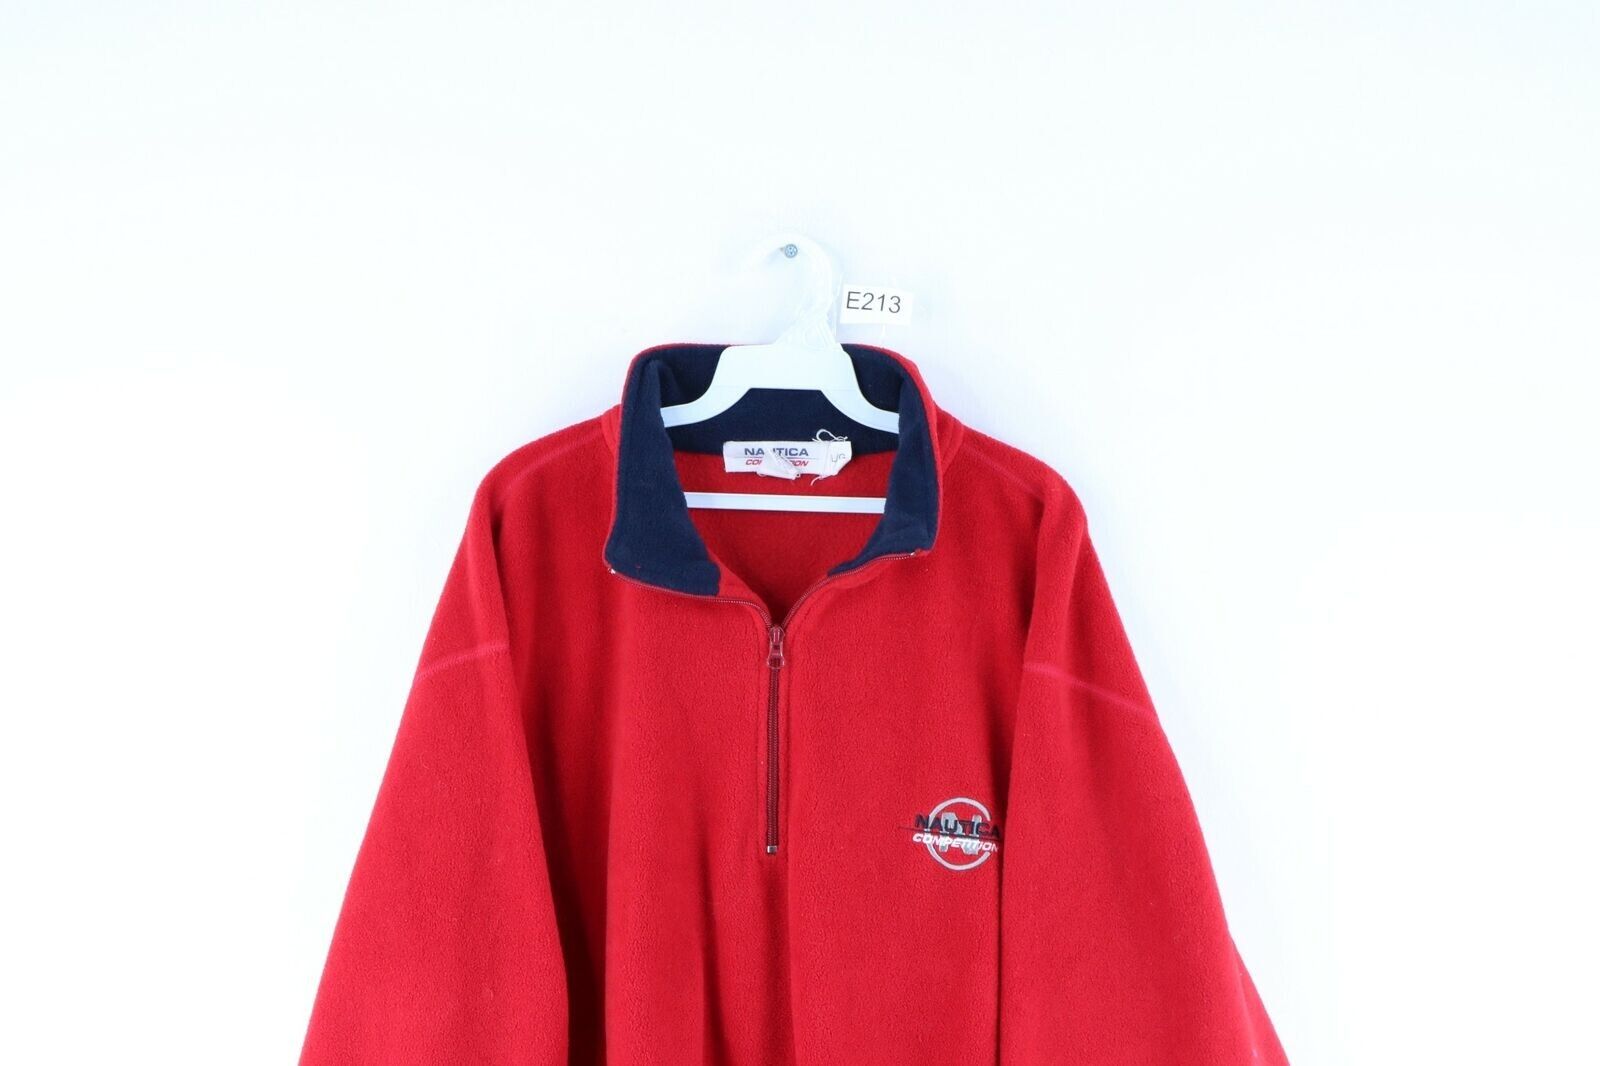 Vintage Vintage 90s Nautica Competition Pullover Fleece Sweater Size US L / EU 52-54 / 3 - 2 Preview